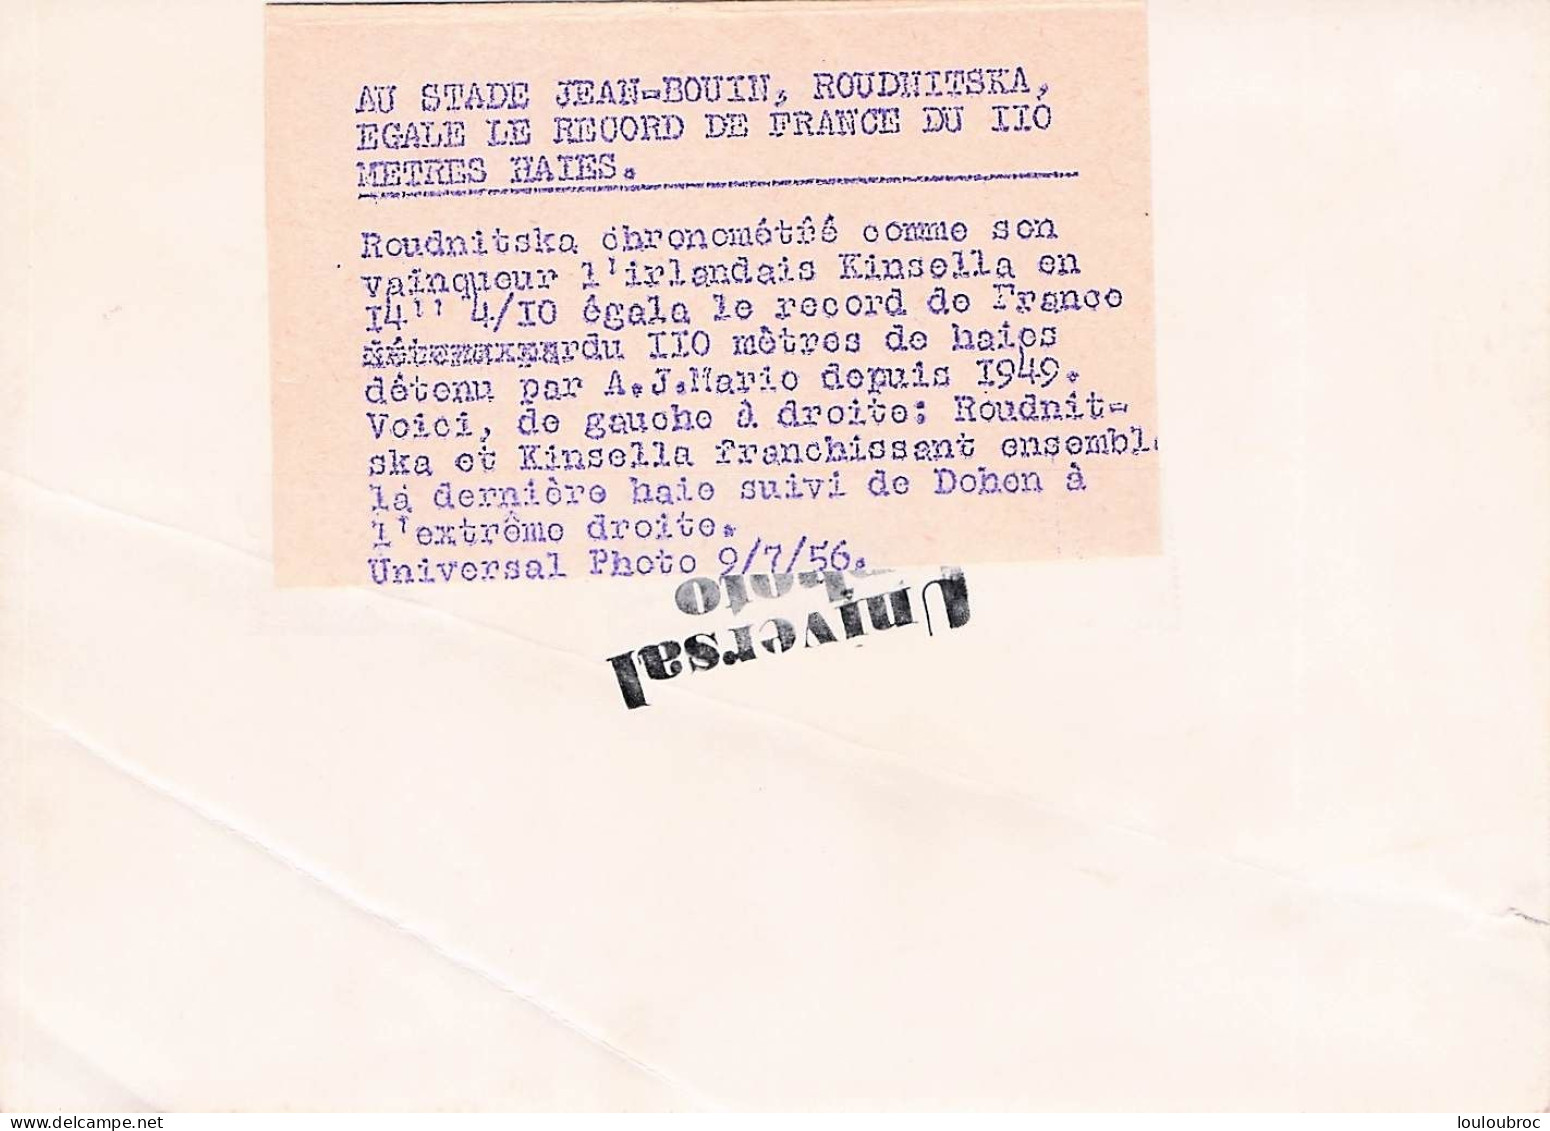 ATHLETISME 07/1956 STADE JEAN BOUIN 110 METRES HAIES ROUDNITSKA  ET KINSELLA  ARRIVES DANS  MEME TEMPS PHOTO 18 X 13 CM - Sports